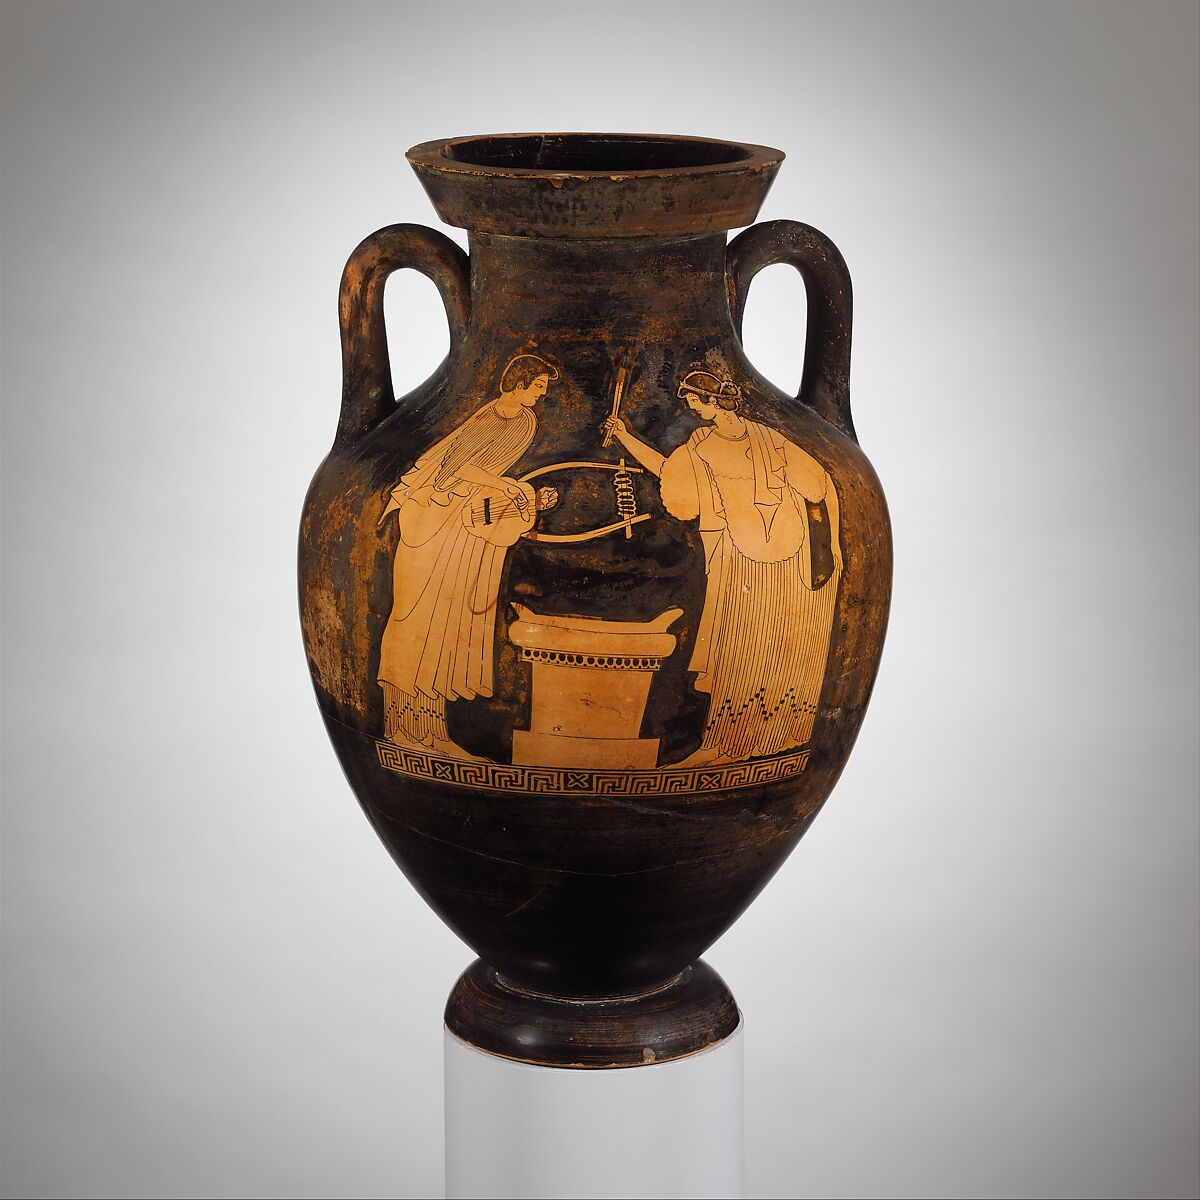 Terracotta amphora (jar), Attributed to the Eucharides Painter, Terracotta, Greek, Attic 